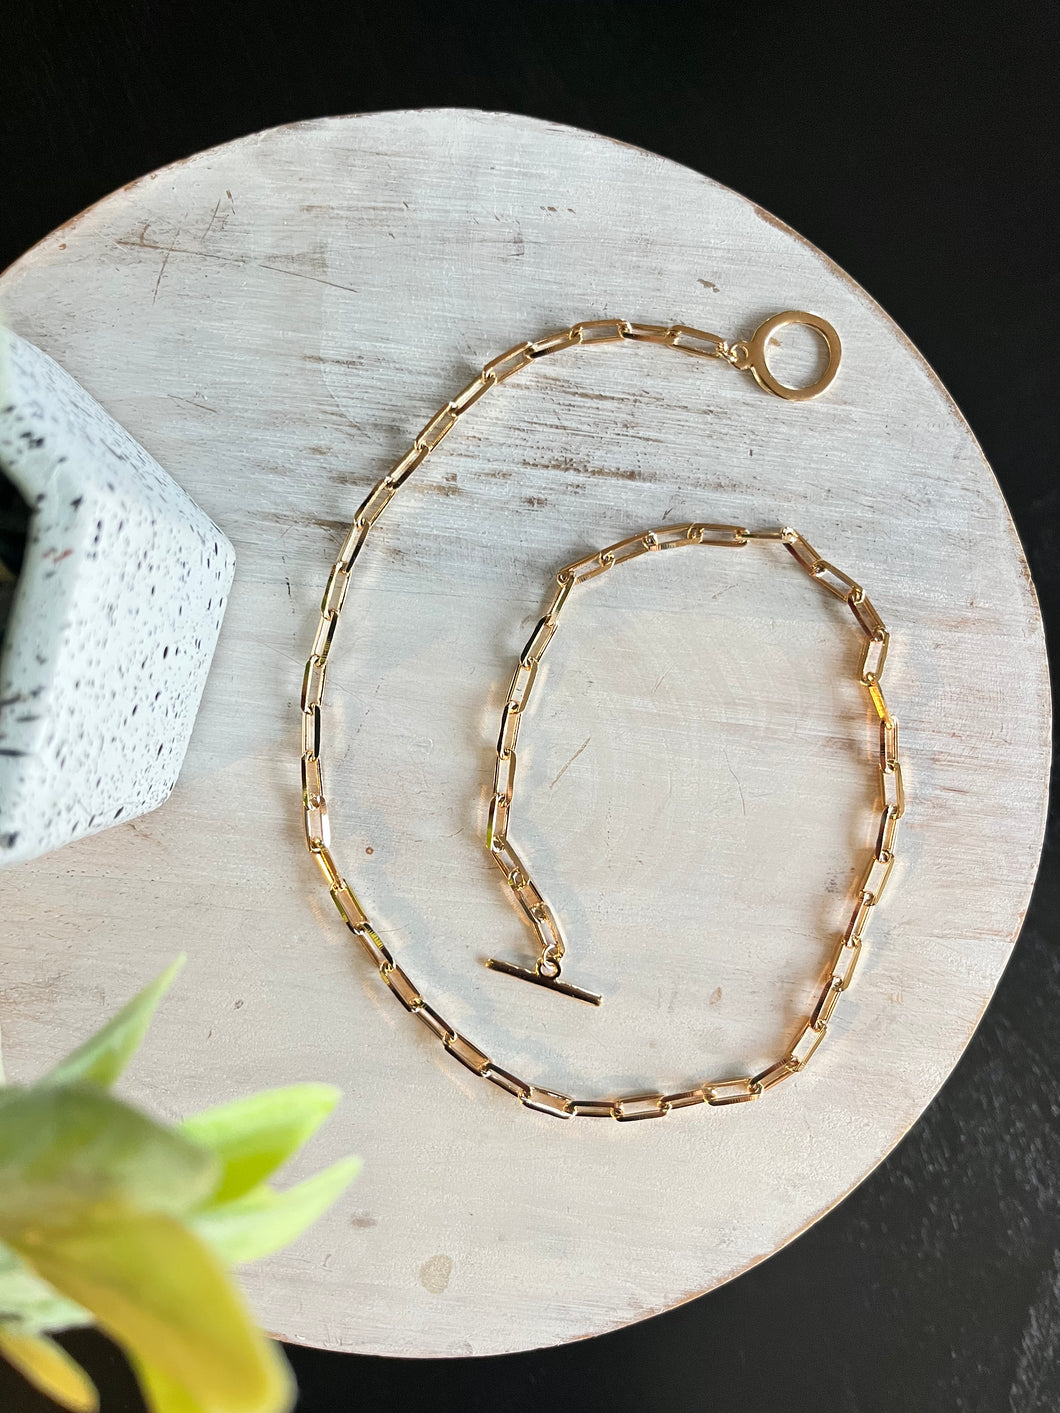 Necklace:  Paper clip chain